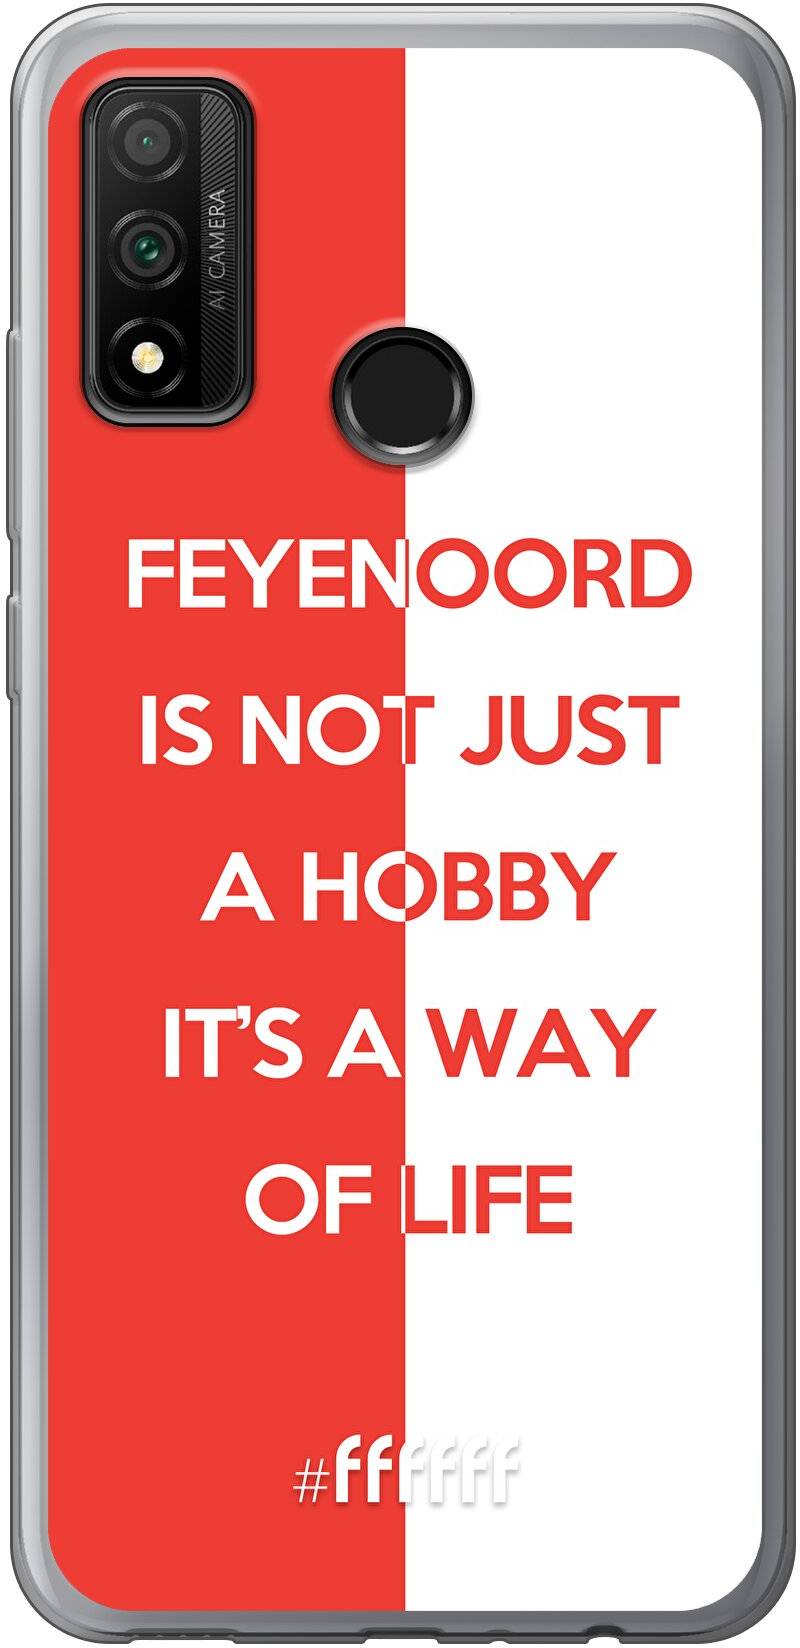 Feyenoord - Way of life P Smart (2020)